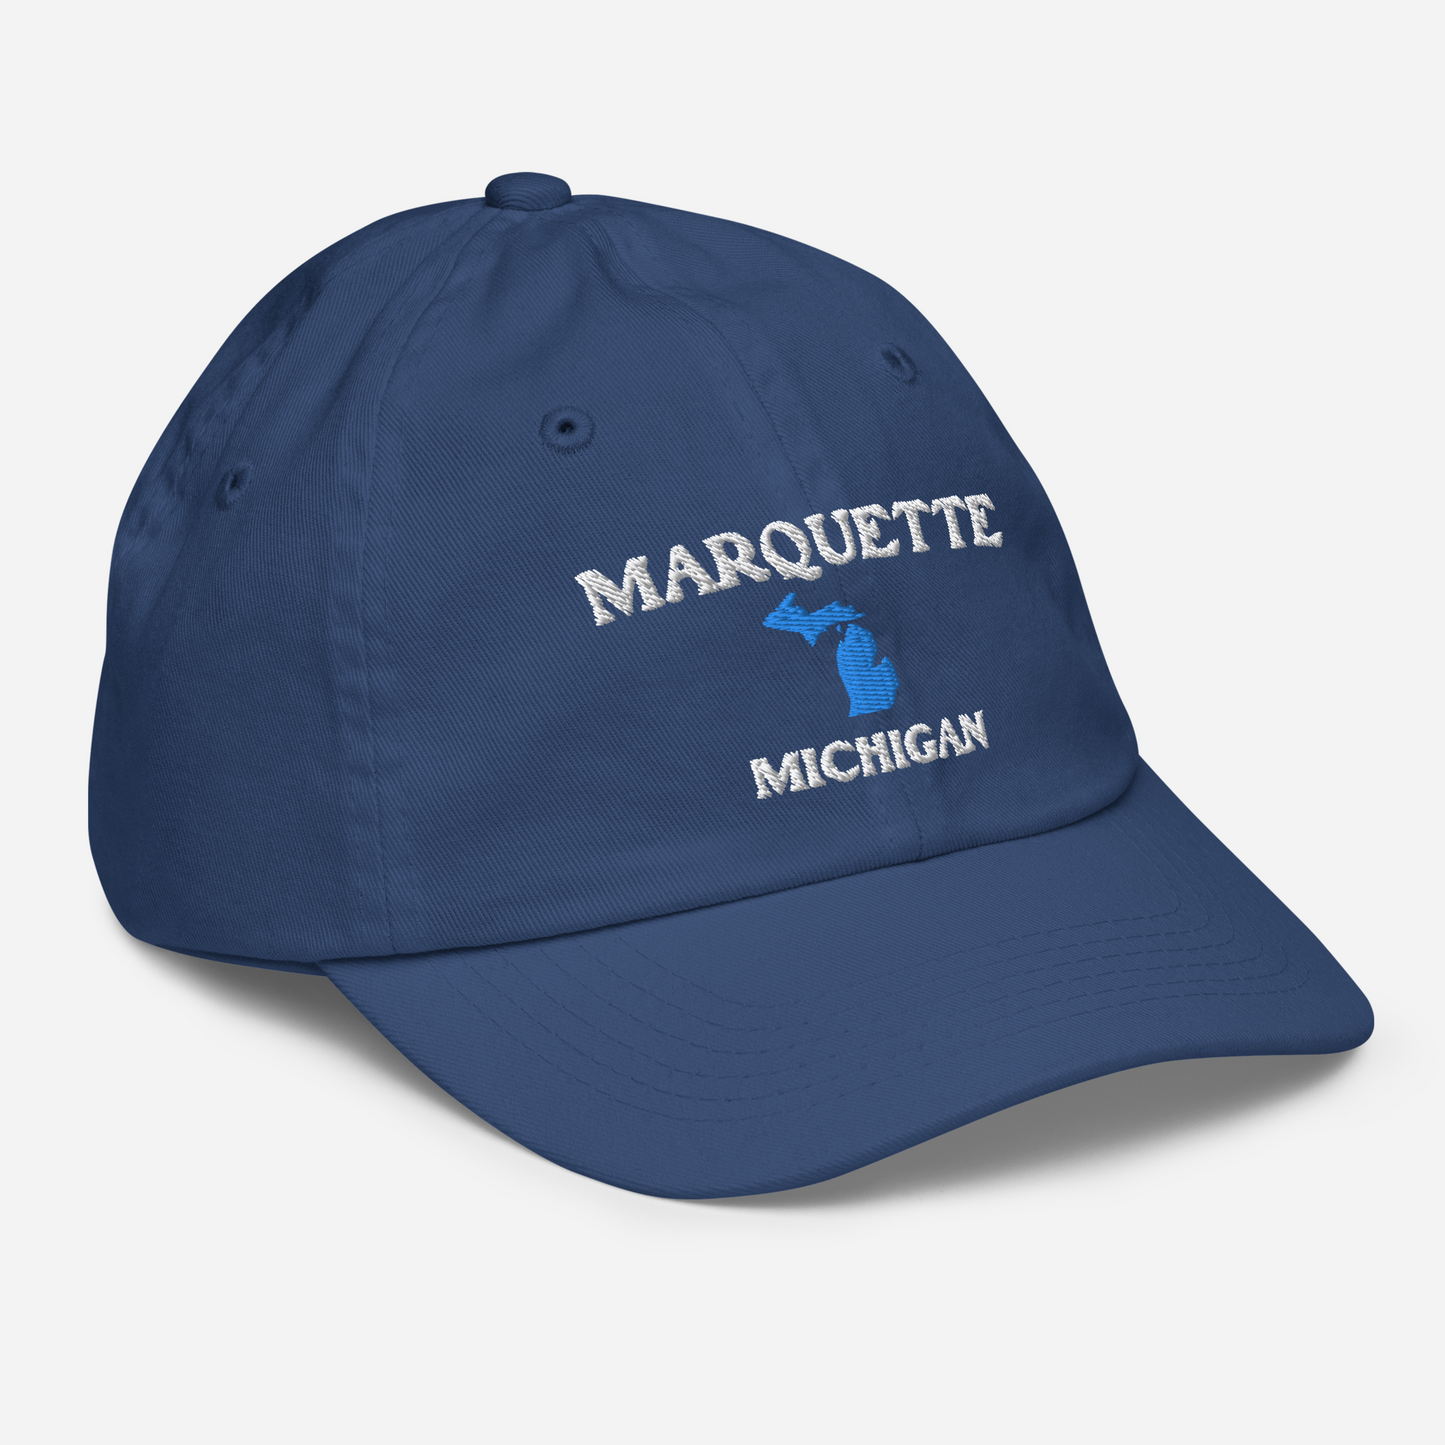 'Marquette Michigan' Youth Baseball Cap (w/ Michigan Outline)